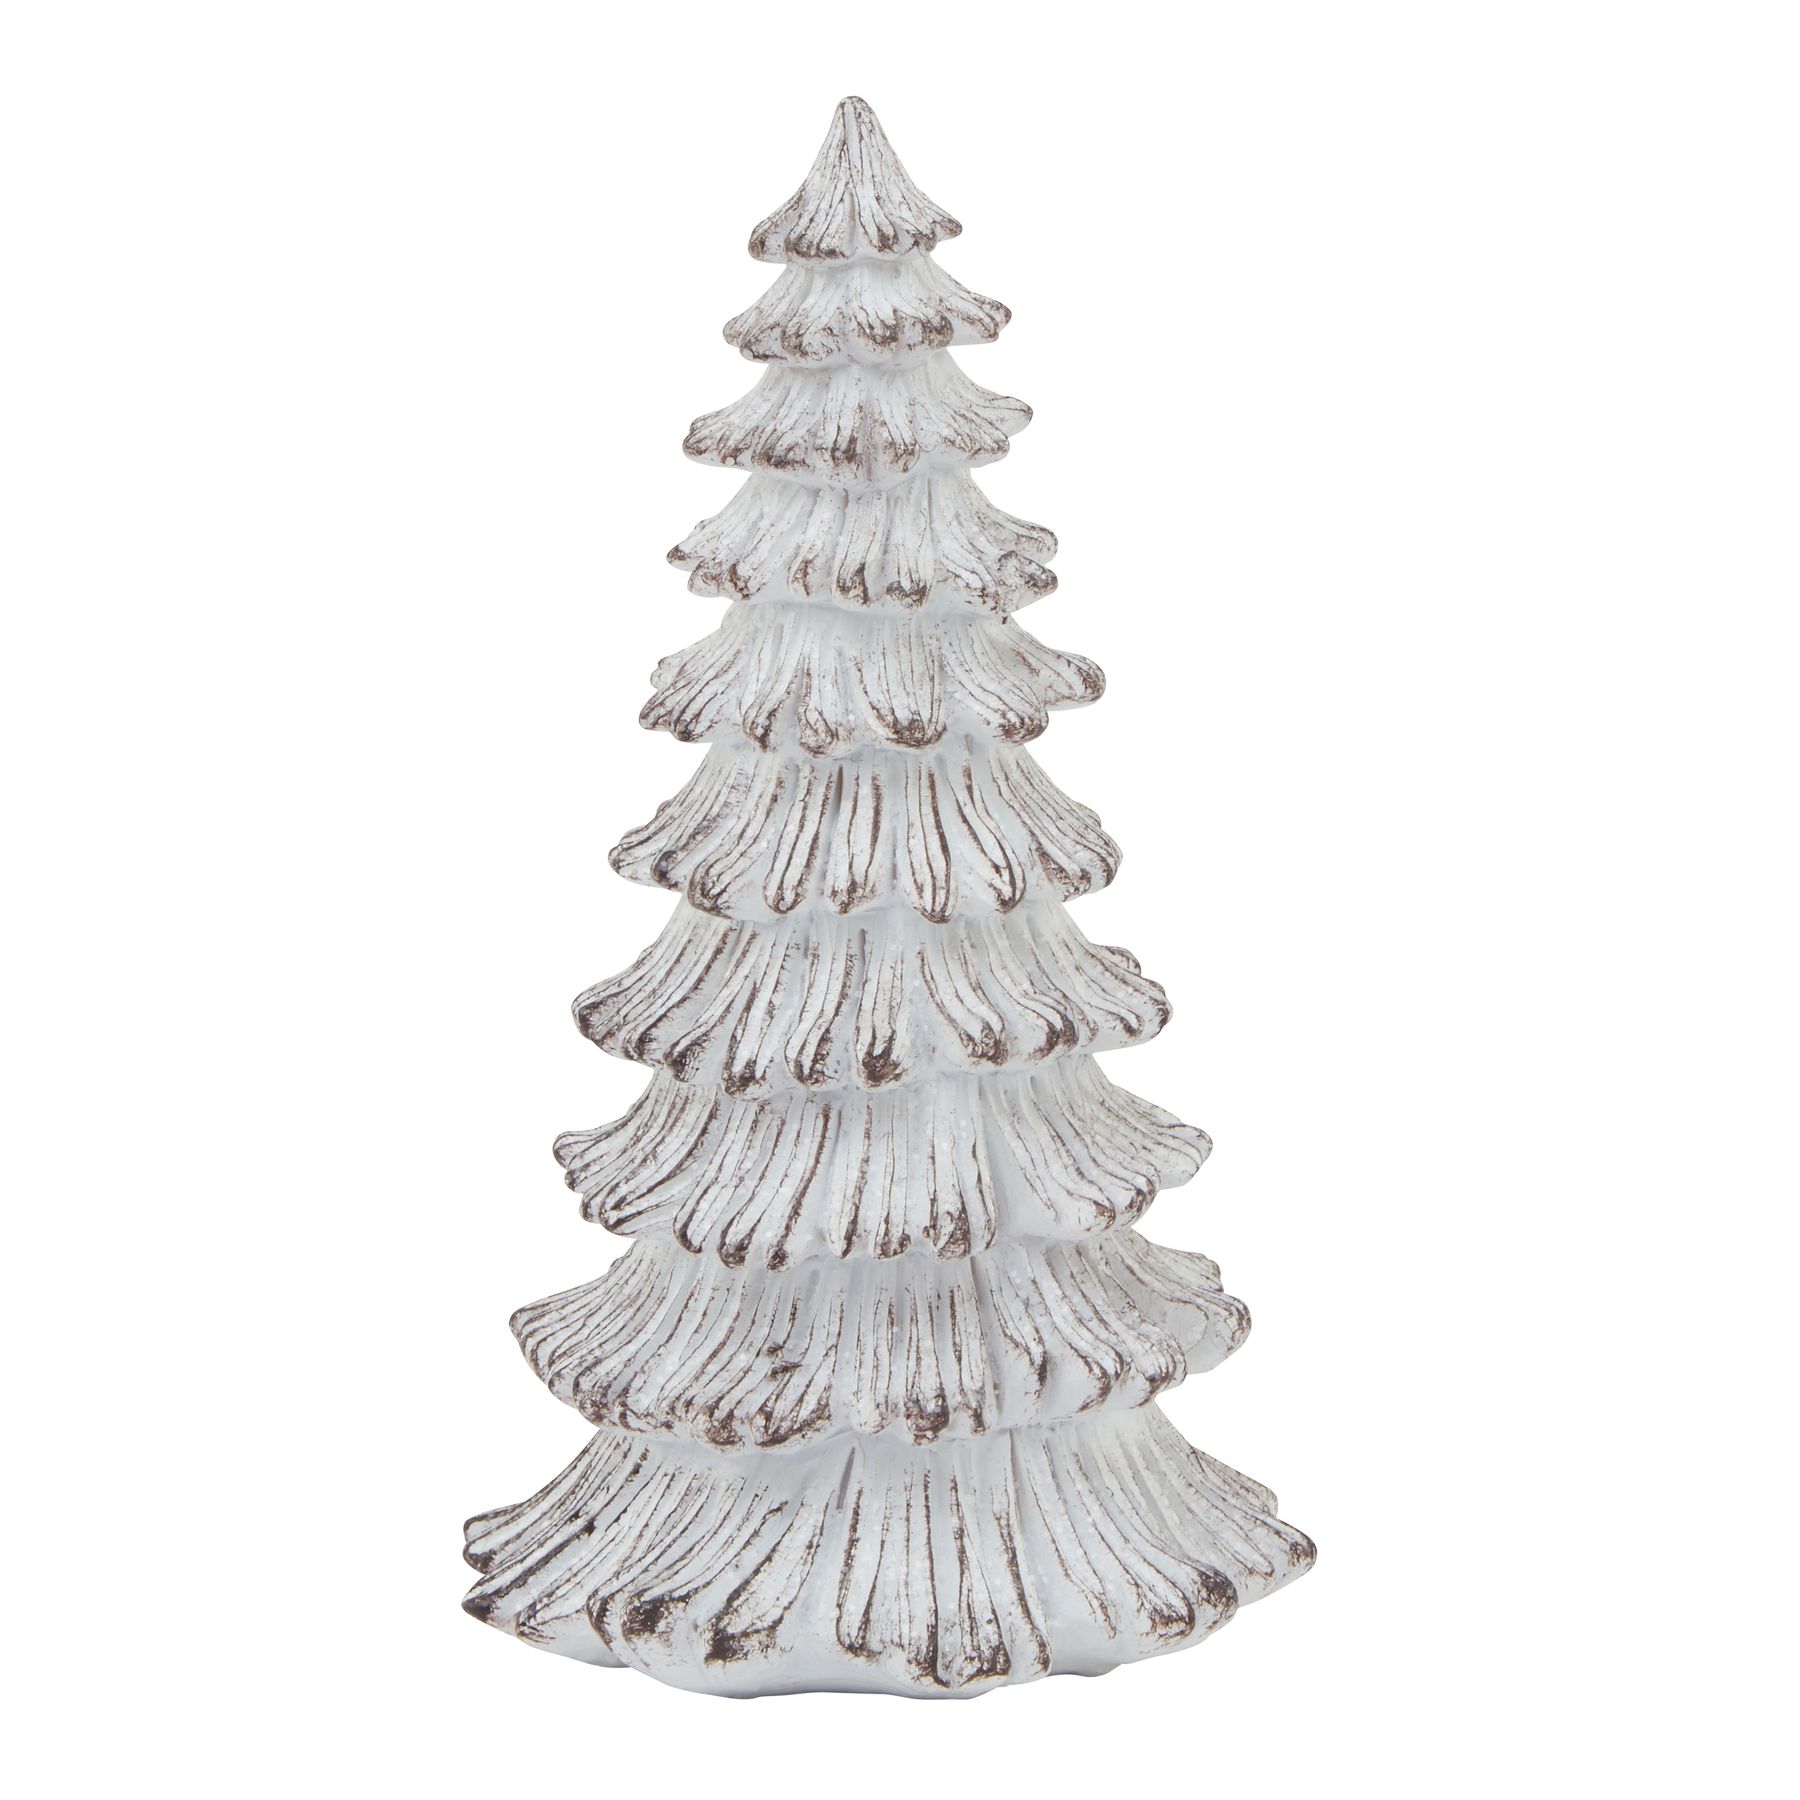 Small Snowy Fir Tree Sculpture - Image 1